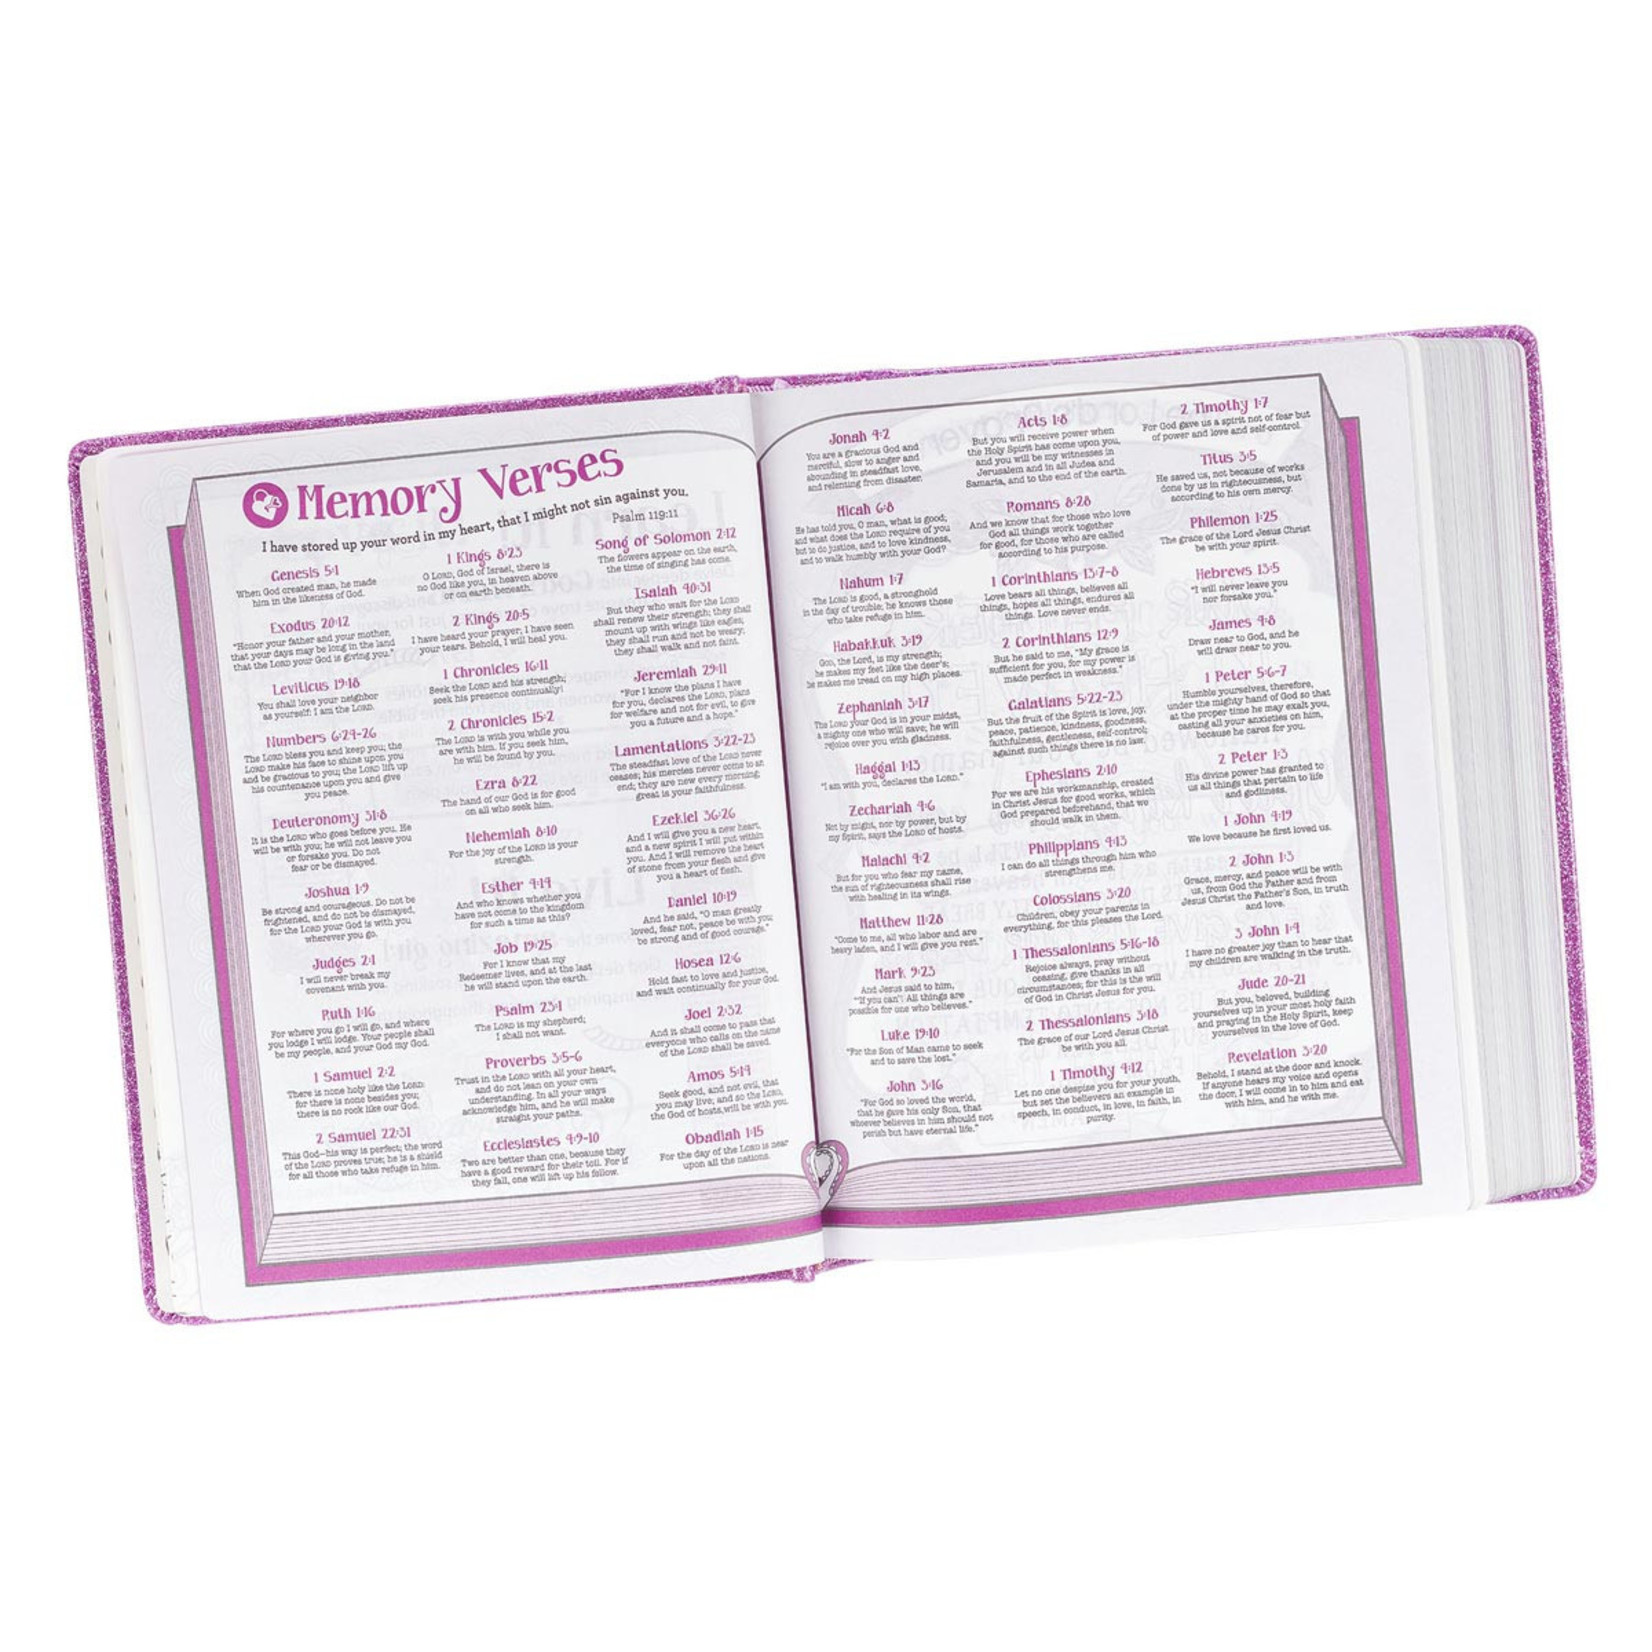 purple esv bible